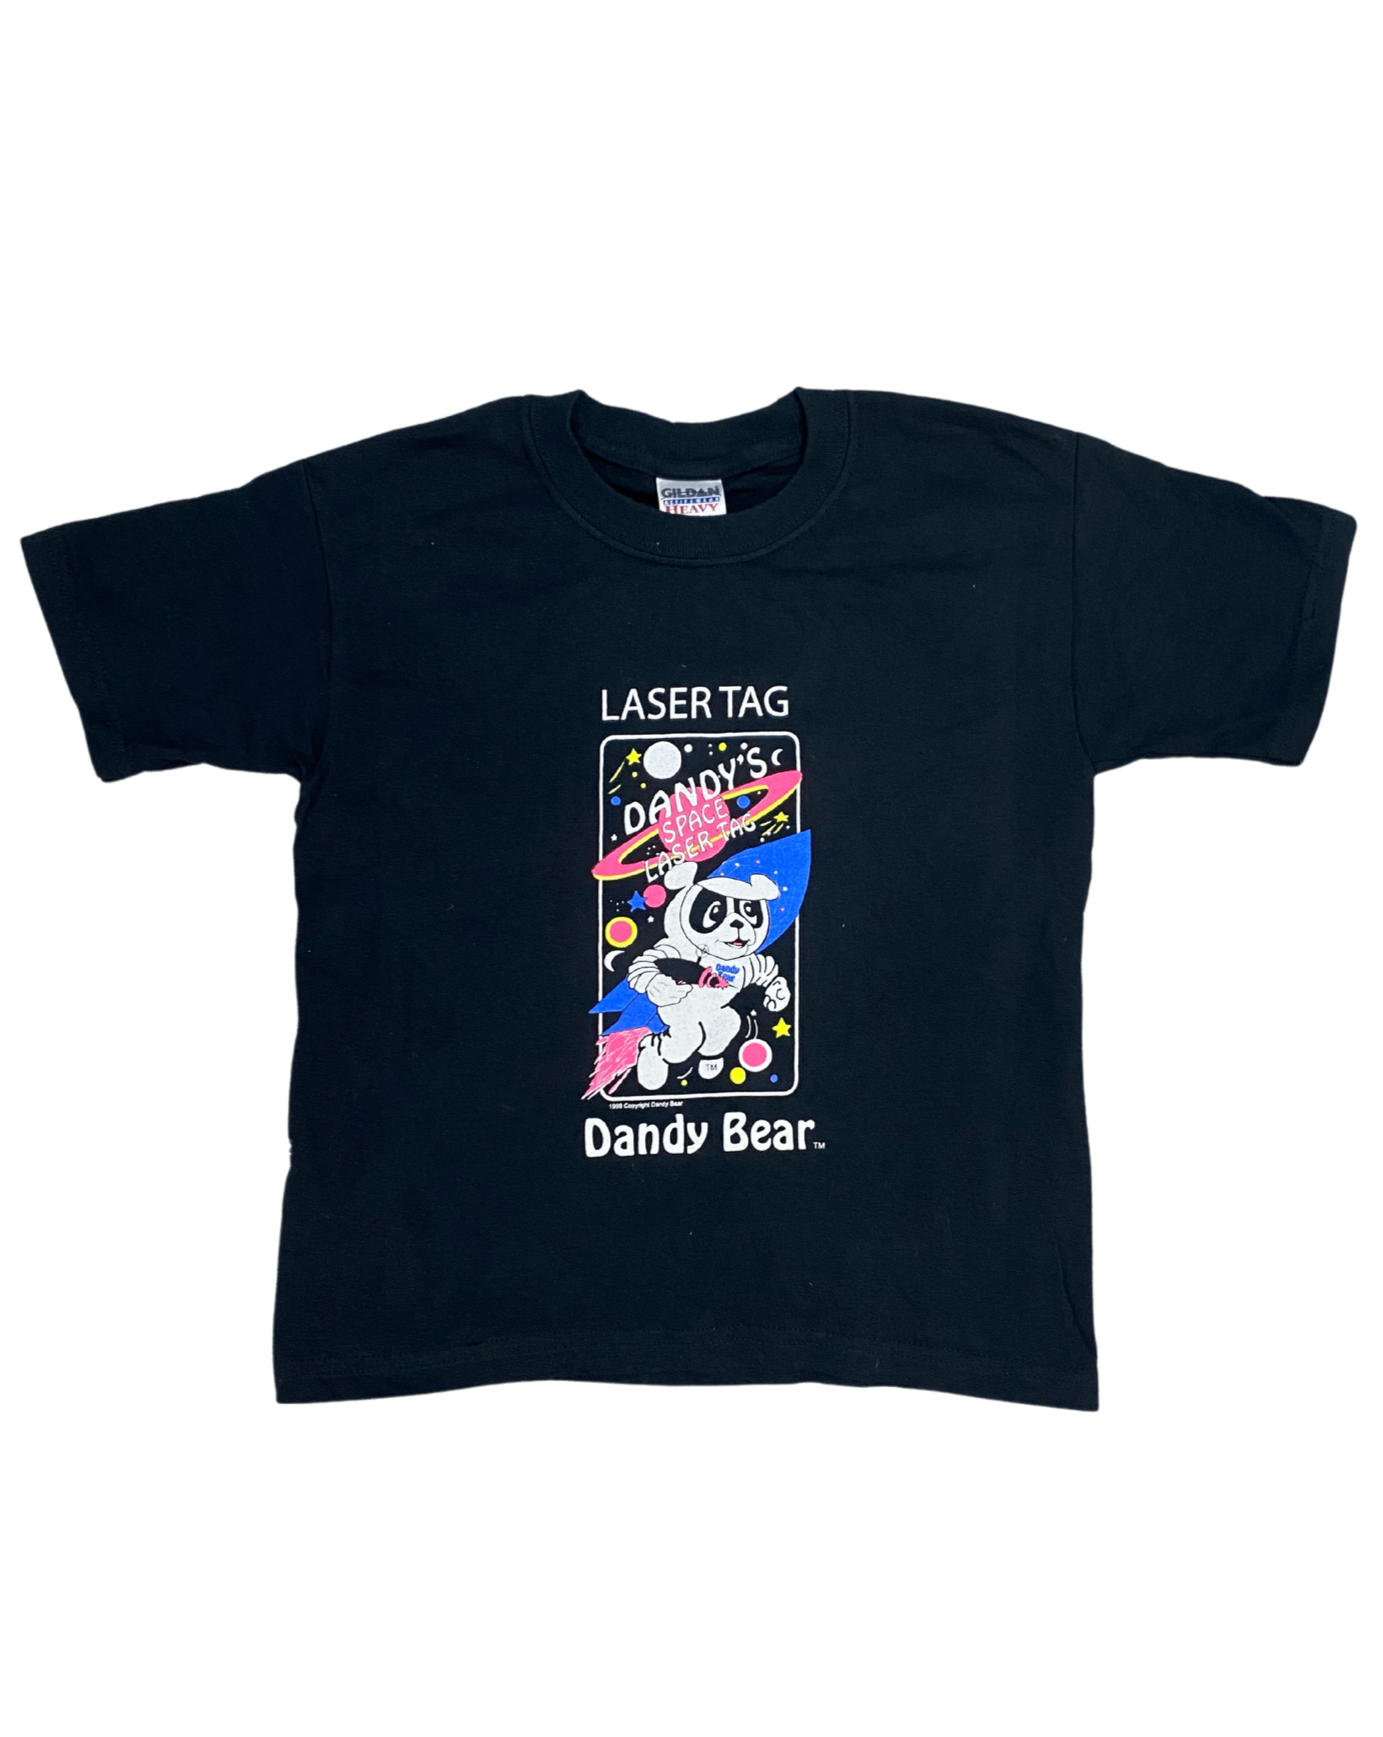 Dandy Bear Laser Tag T-shirt